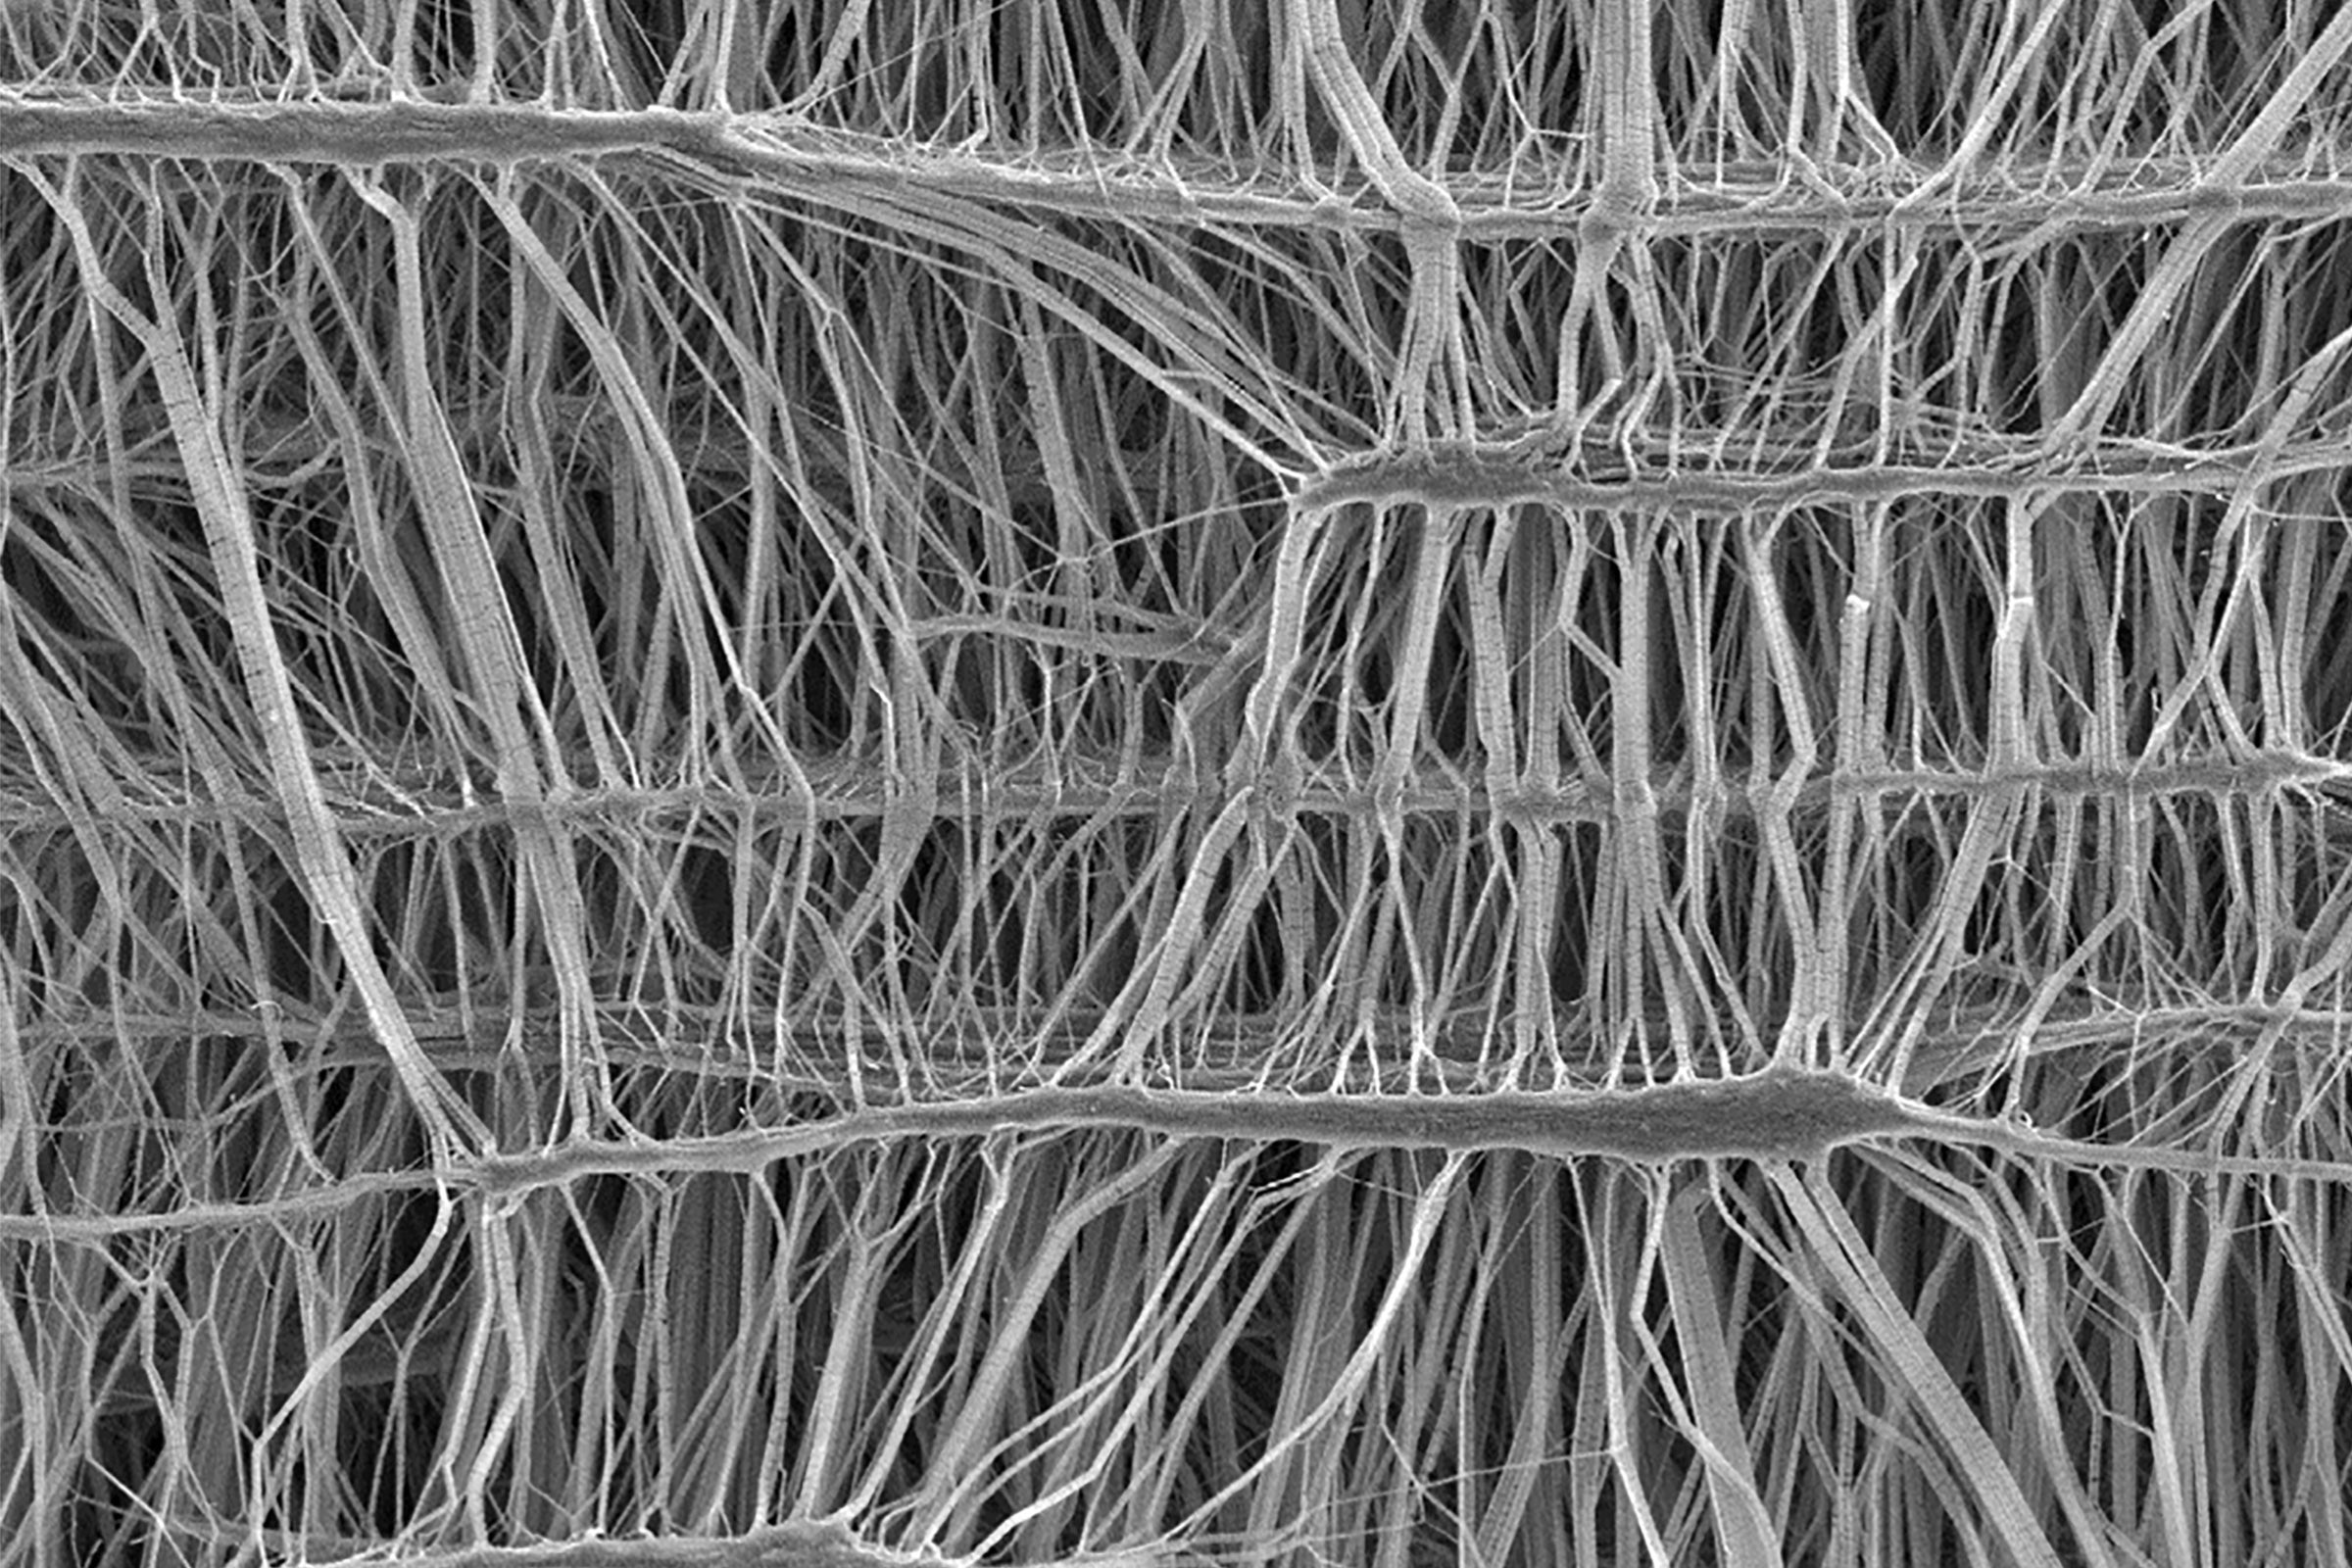 SEM image of Lyoguard Tray ePTFE membrane